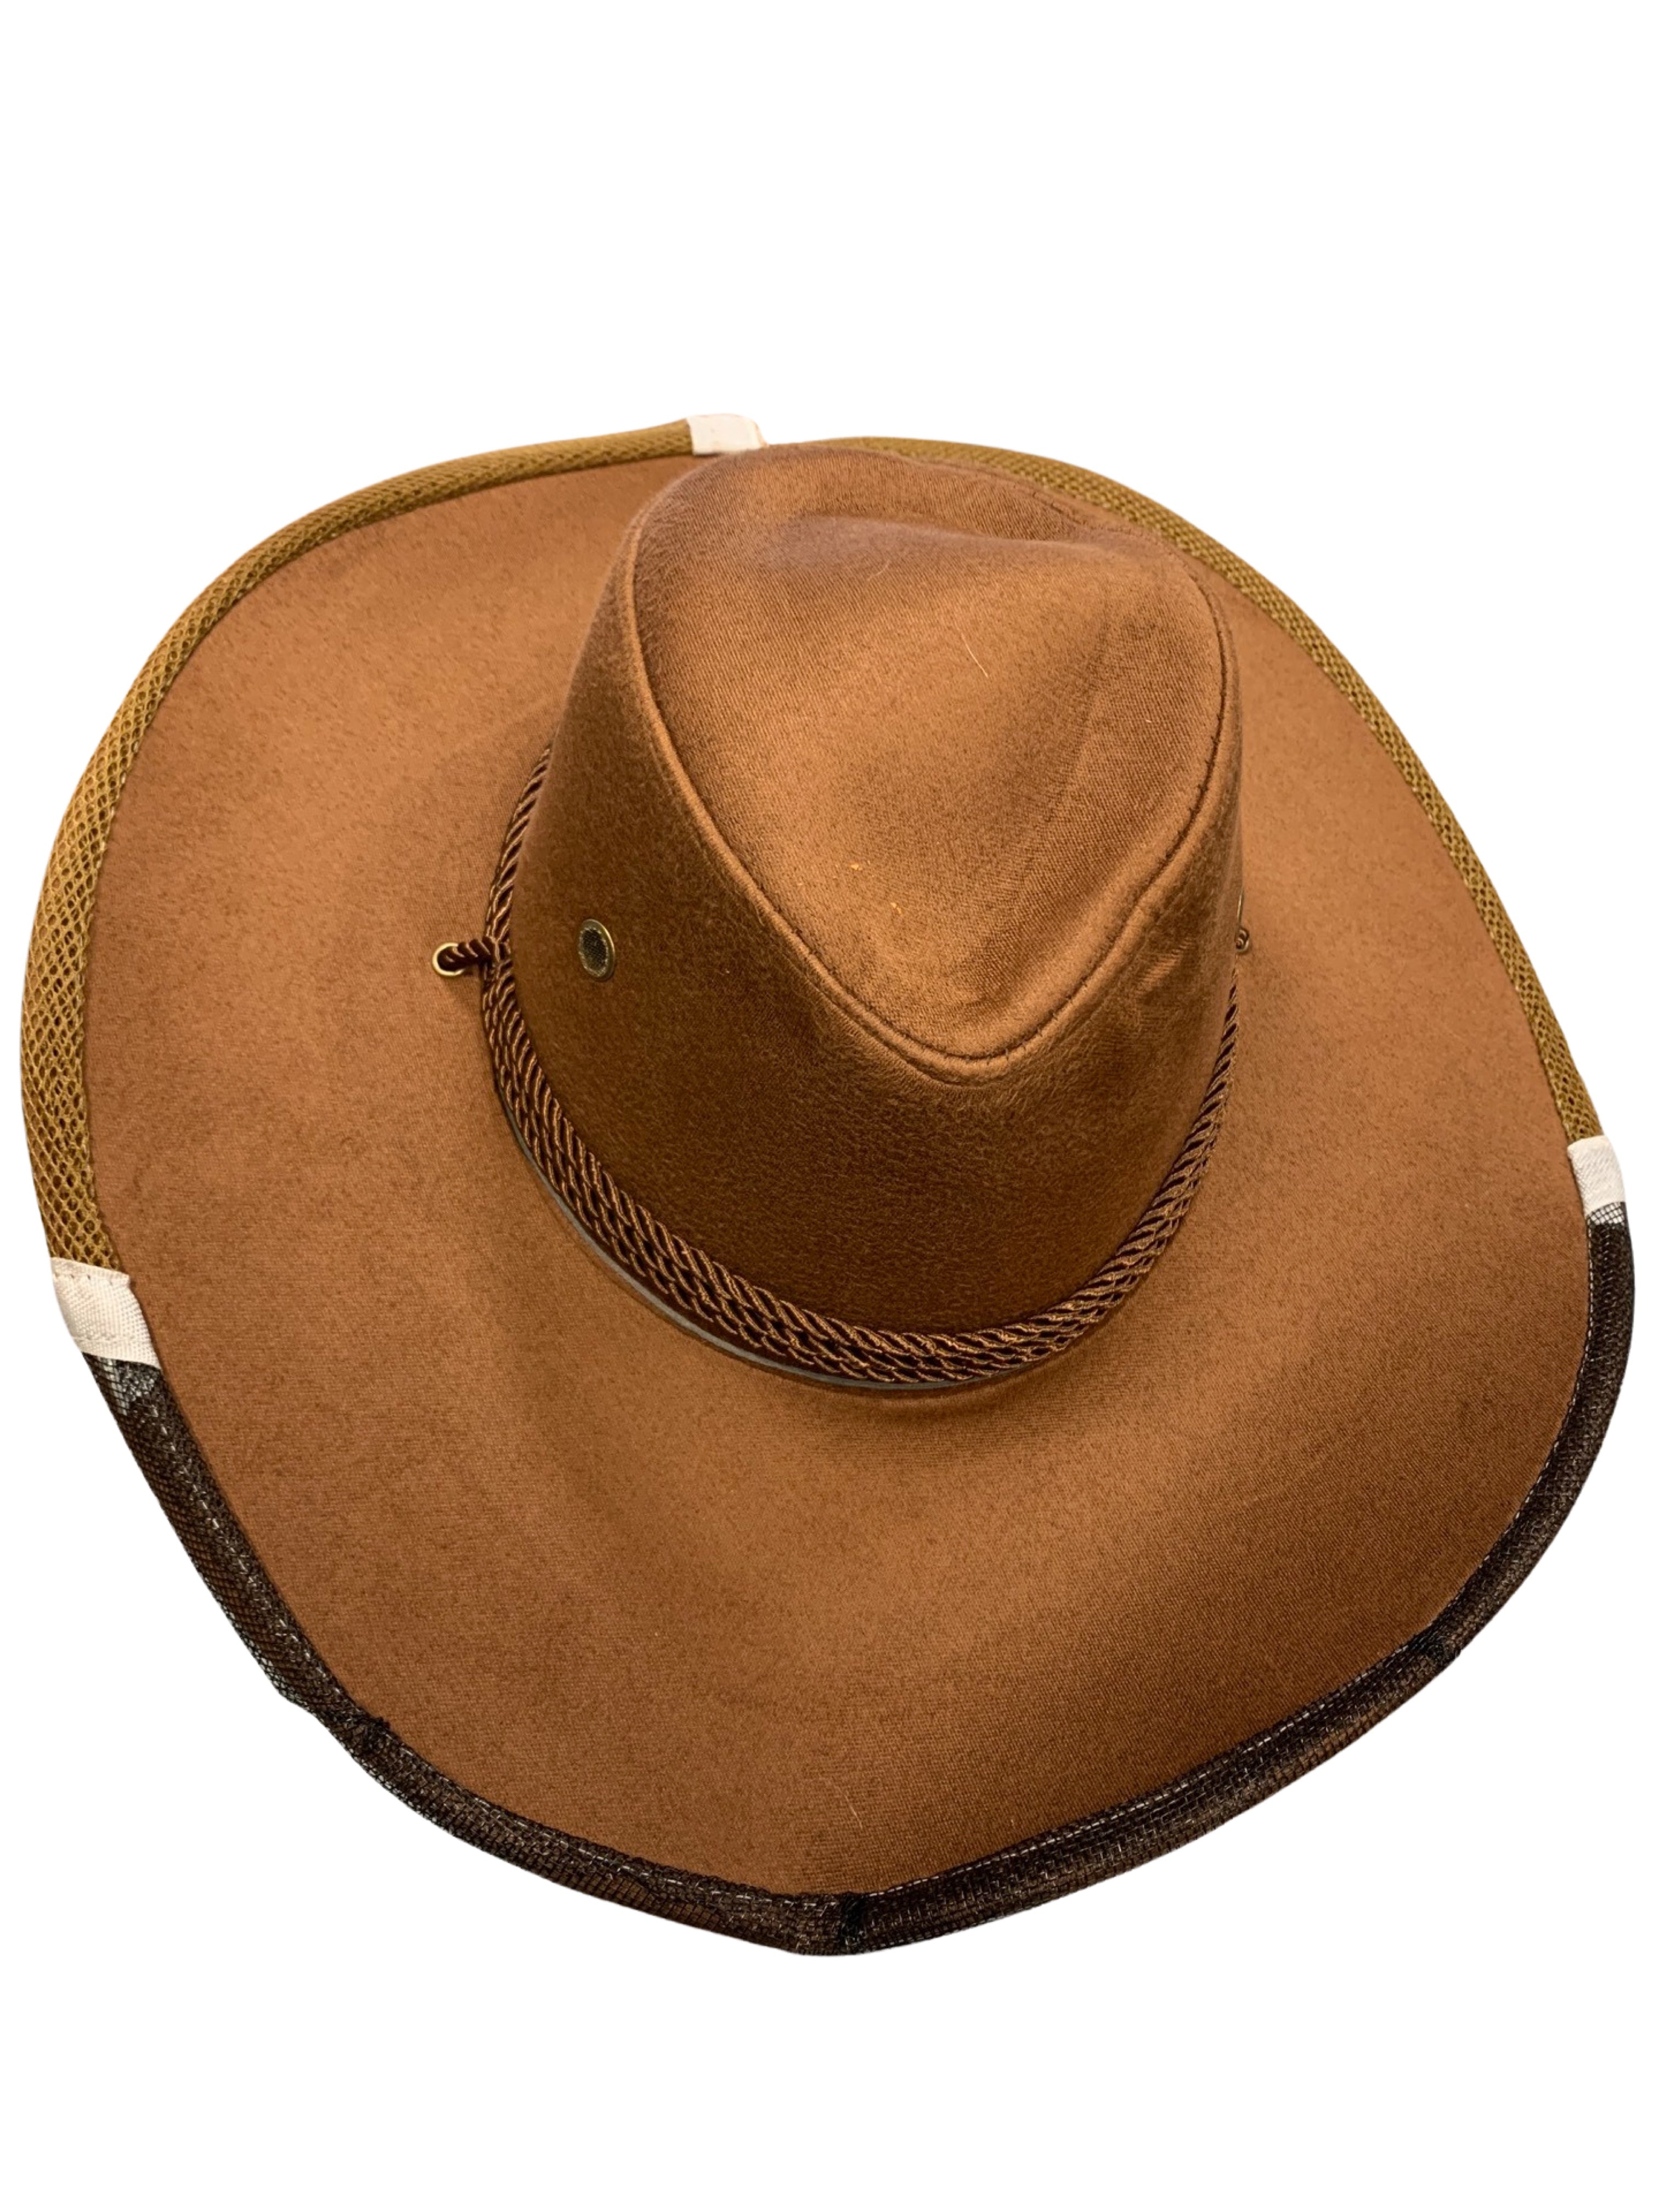 Cowboy Hat with Veil